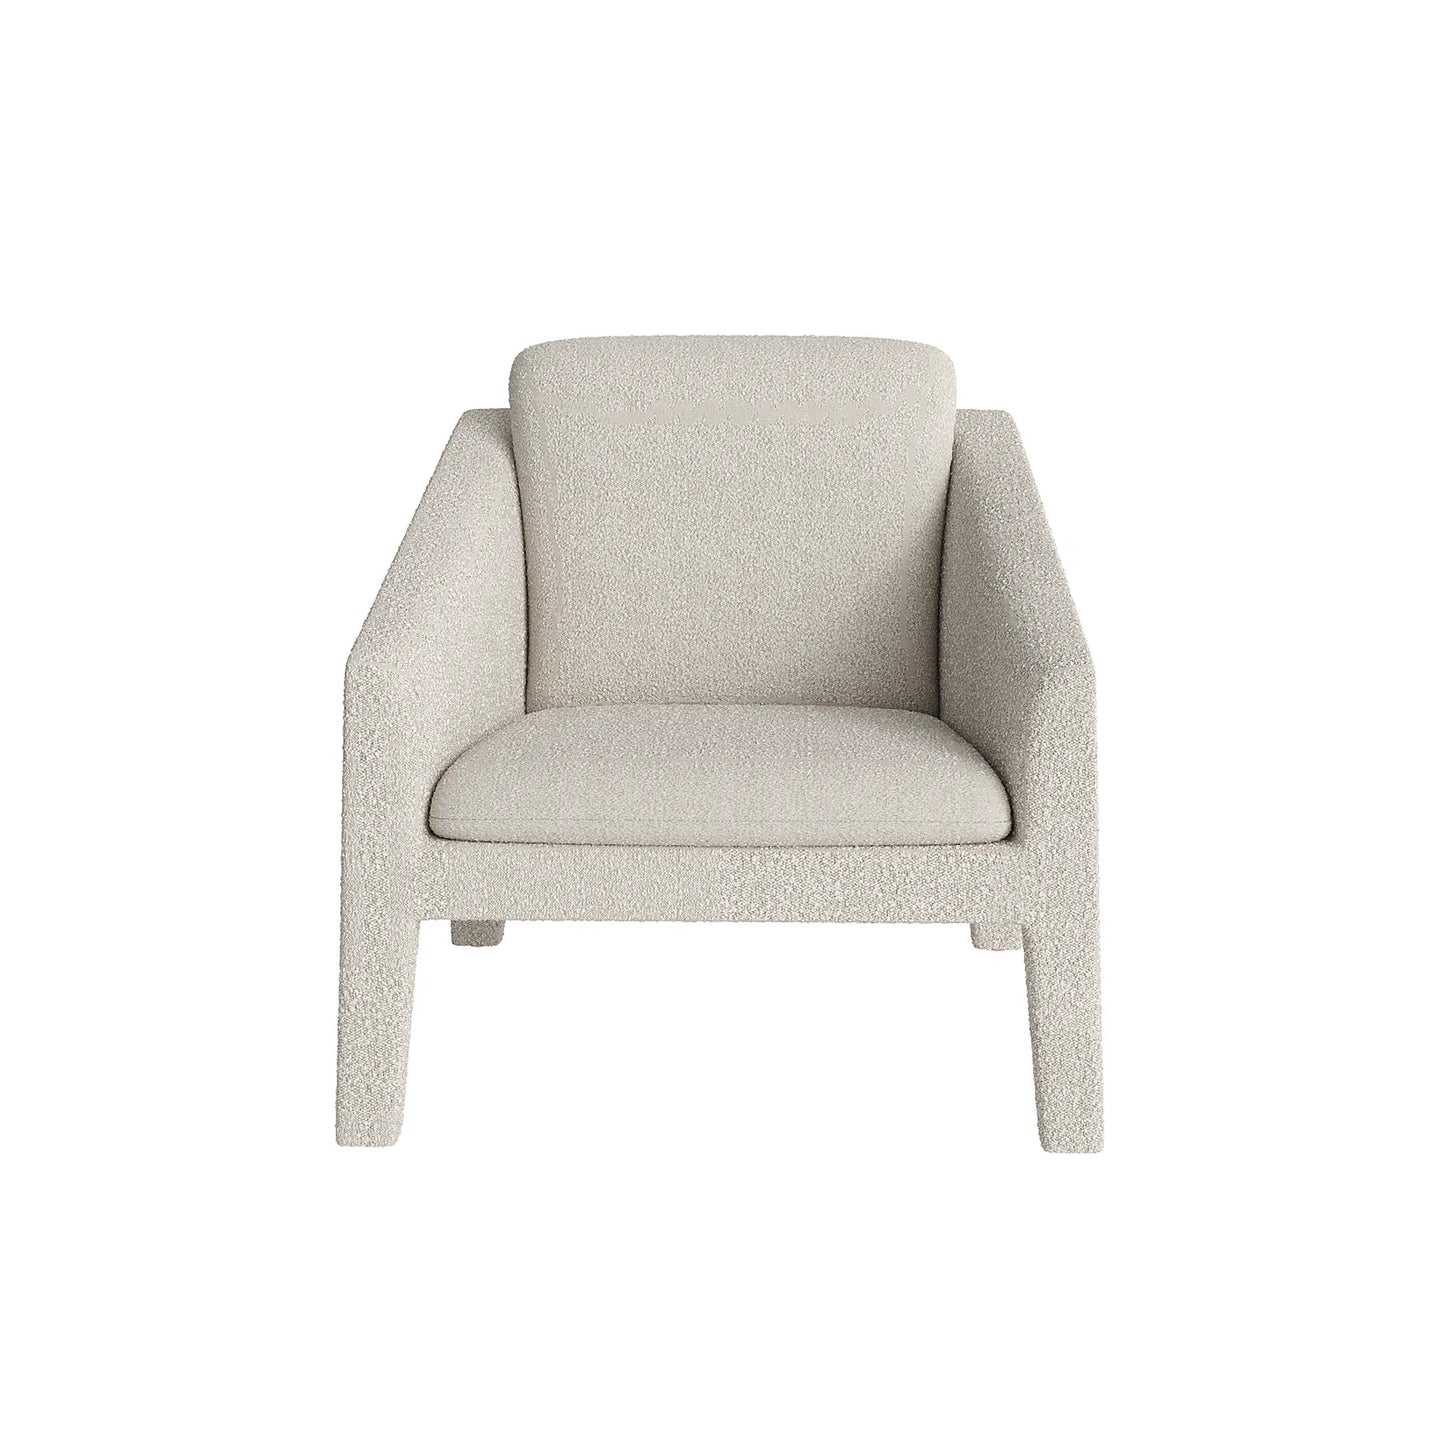 Guardian Lounge Chair - Maya Cream Boucle